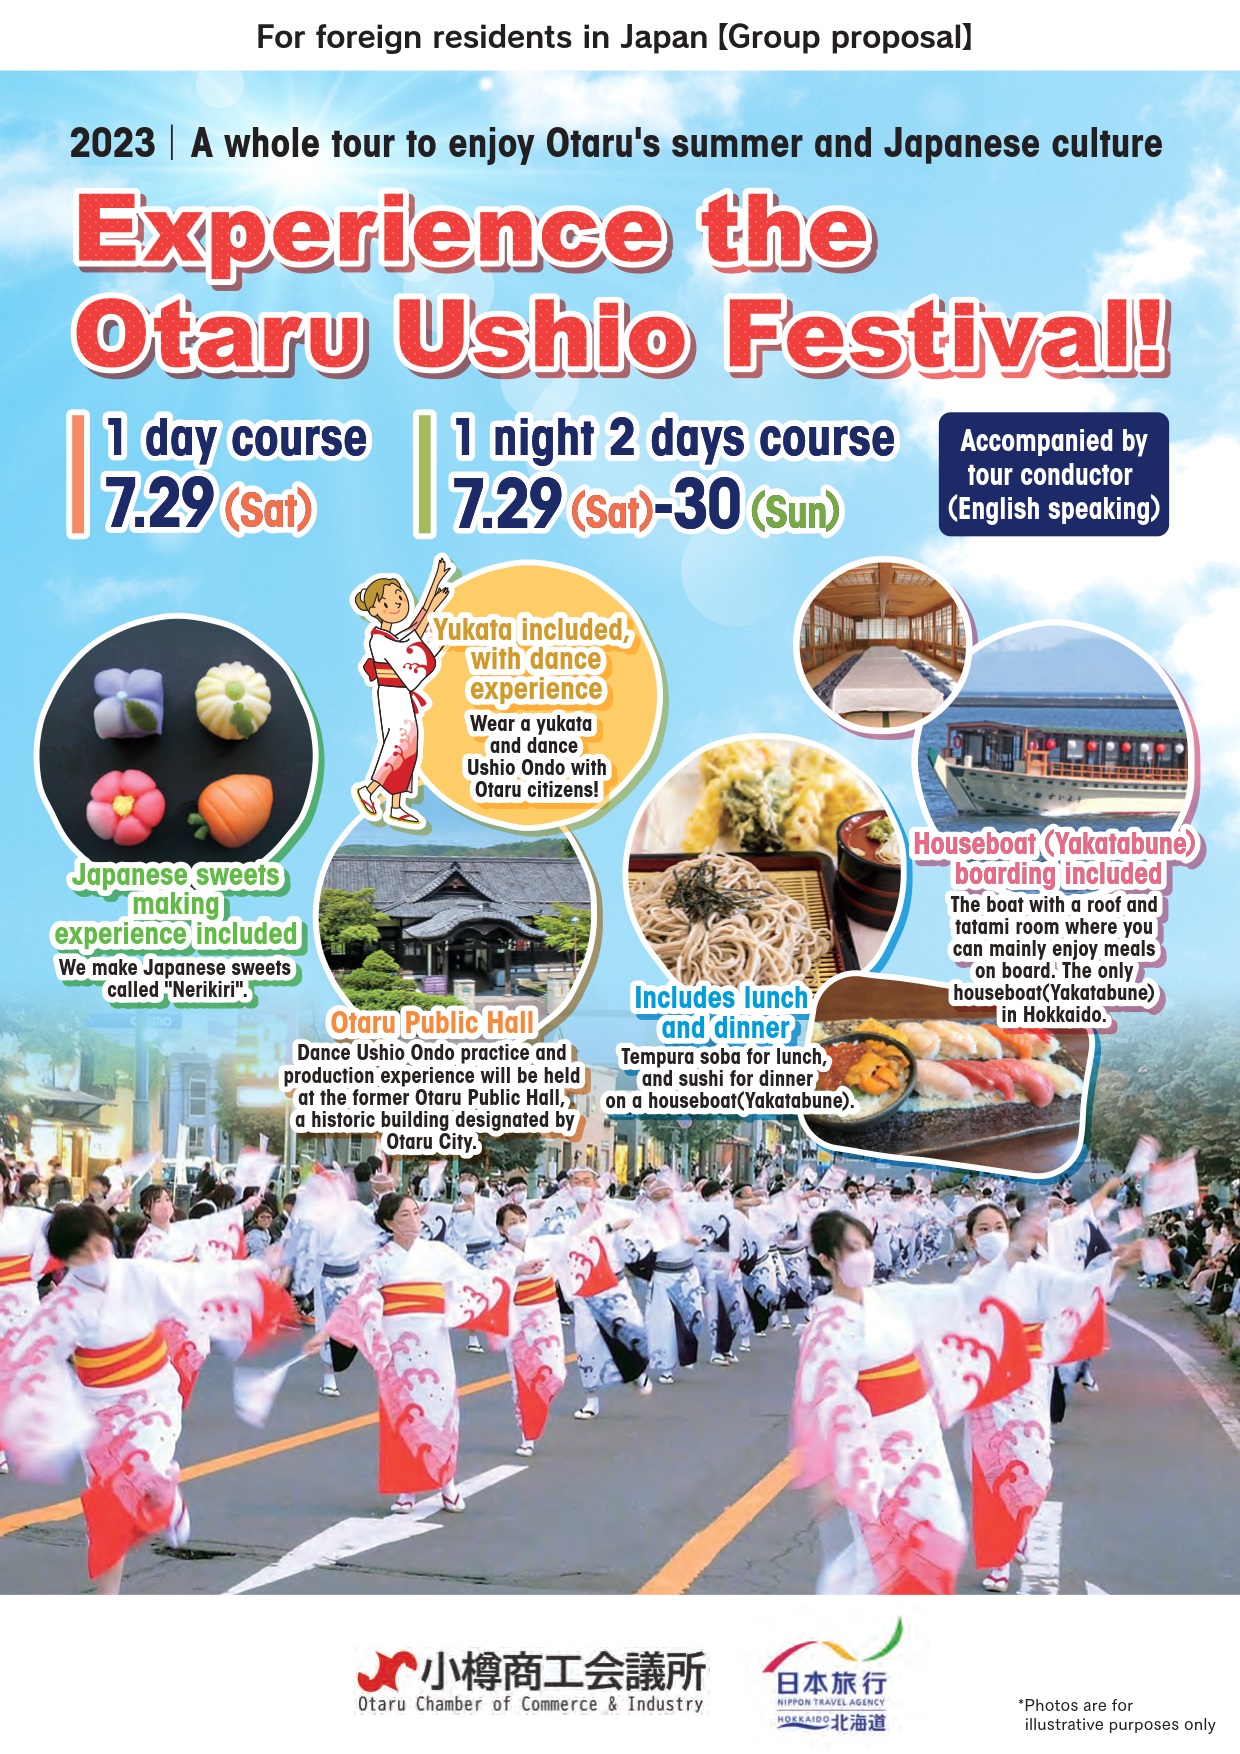 Experience the Otar Ushio Festival!